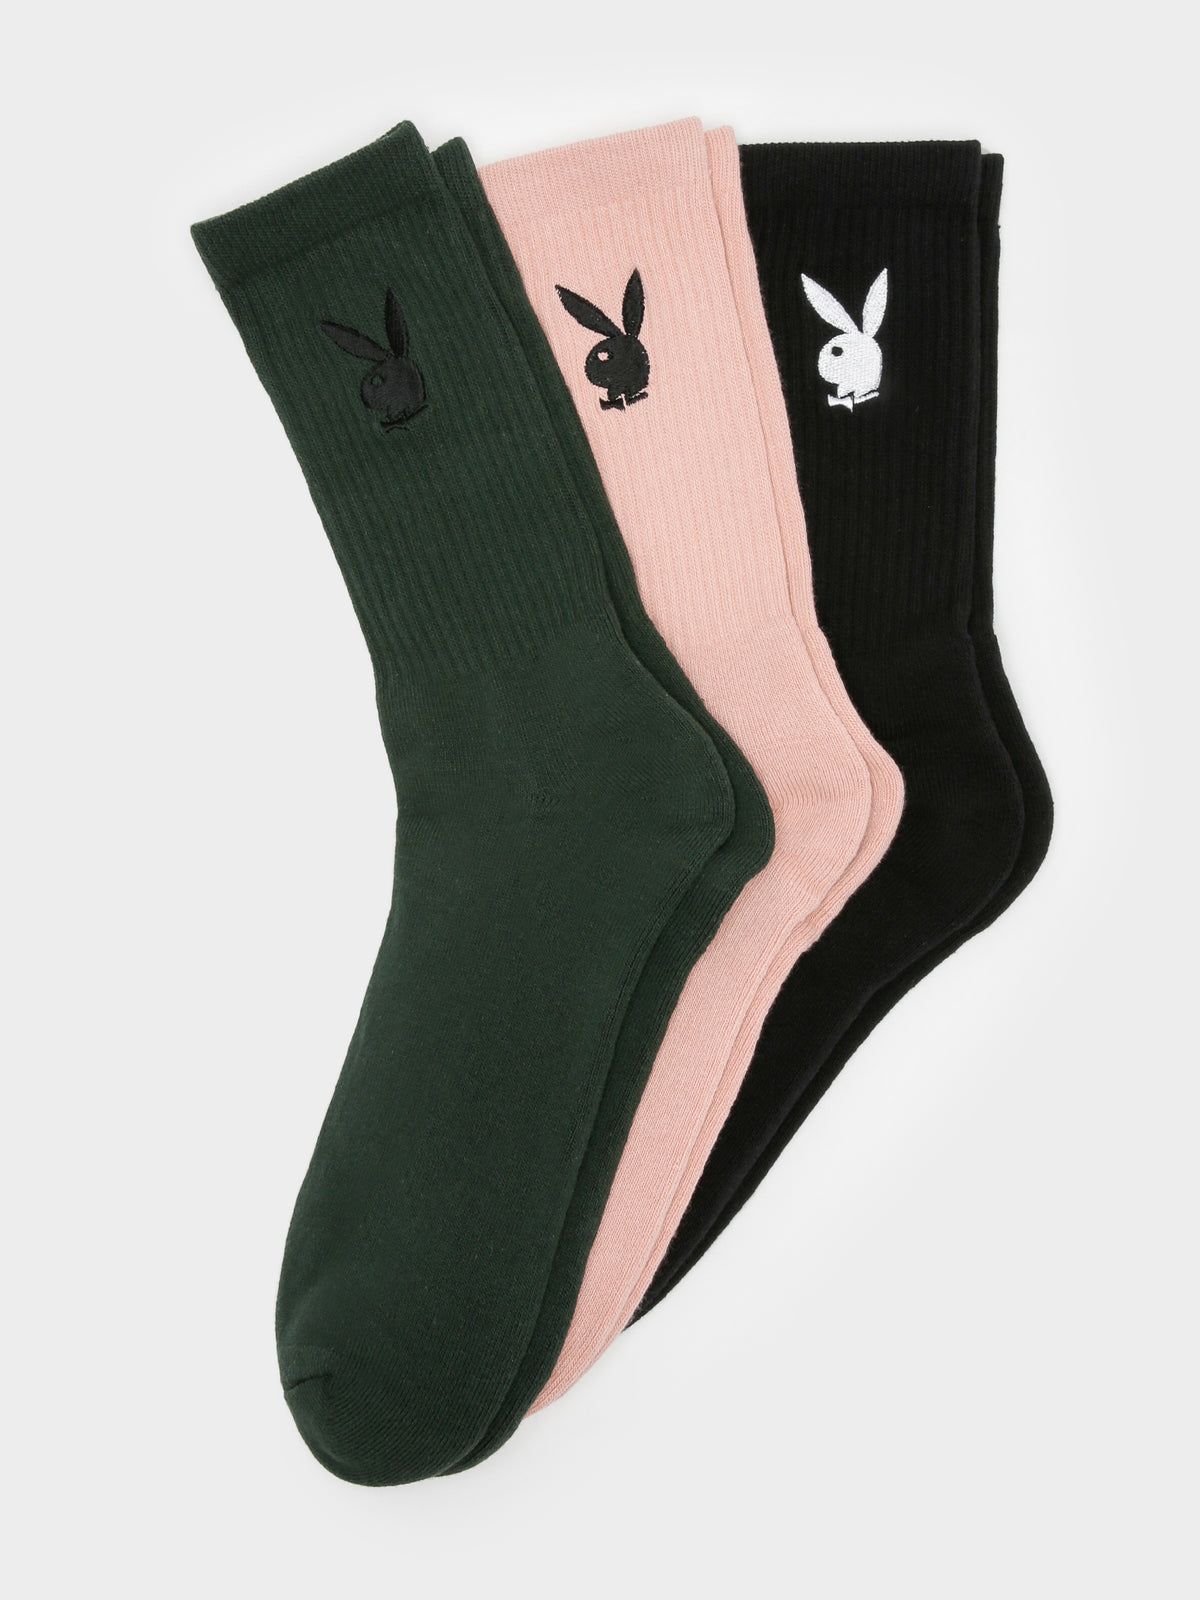 3 Pairs of Bunny Basics Crew Socks in Green, Pink &amp; Black